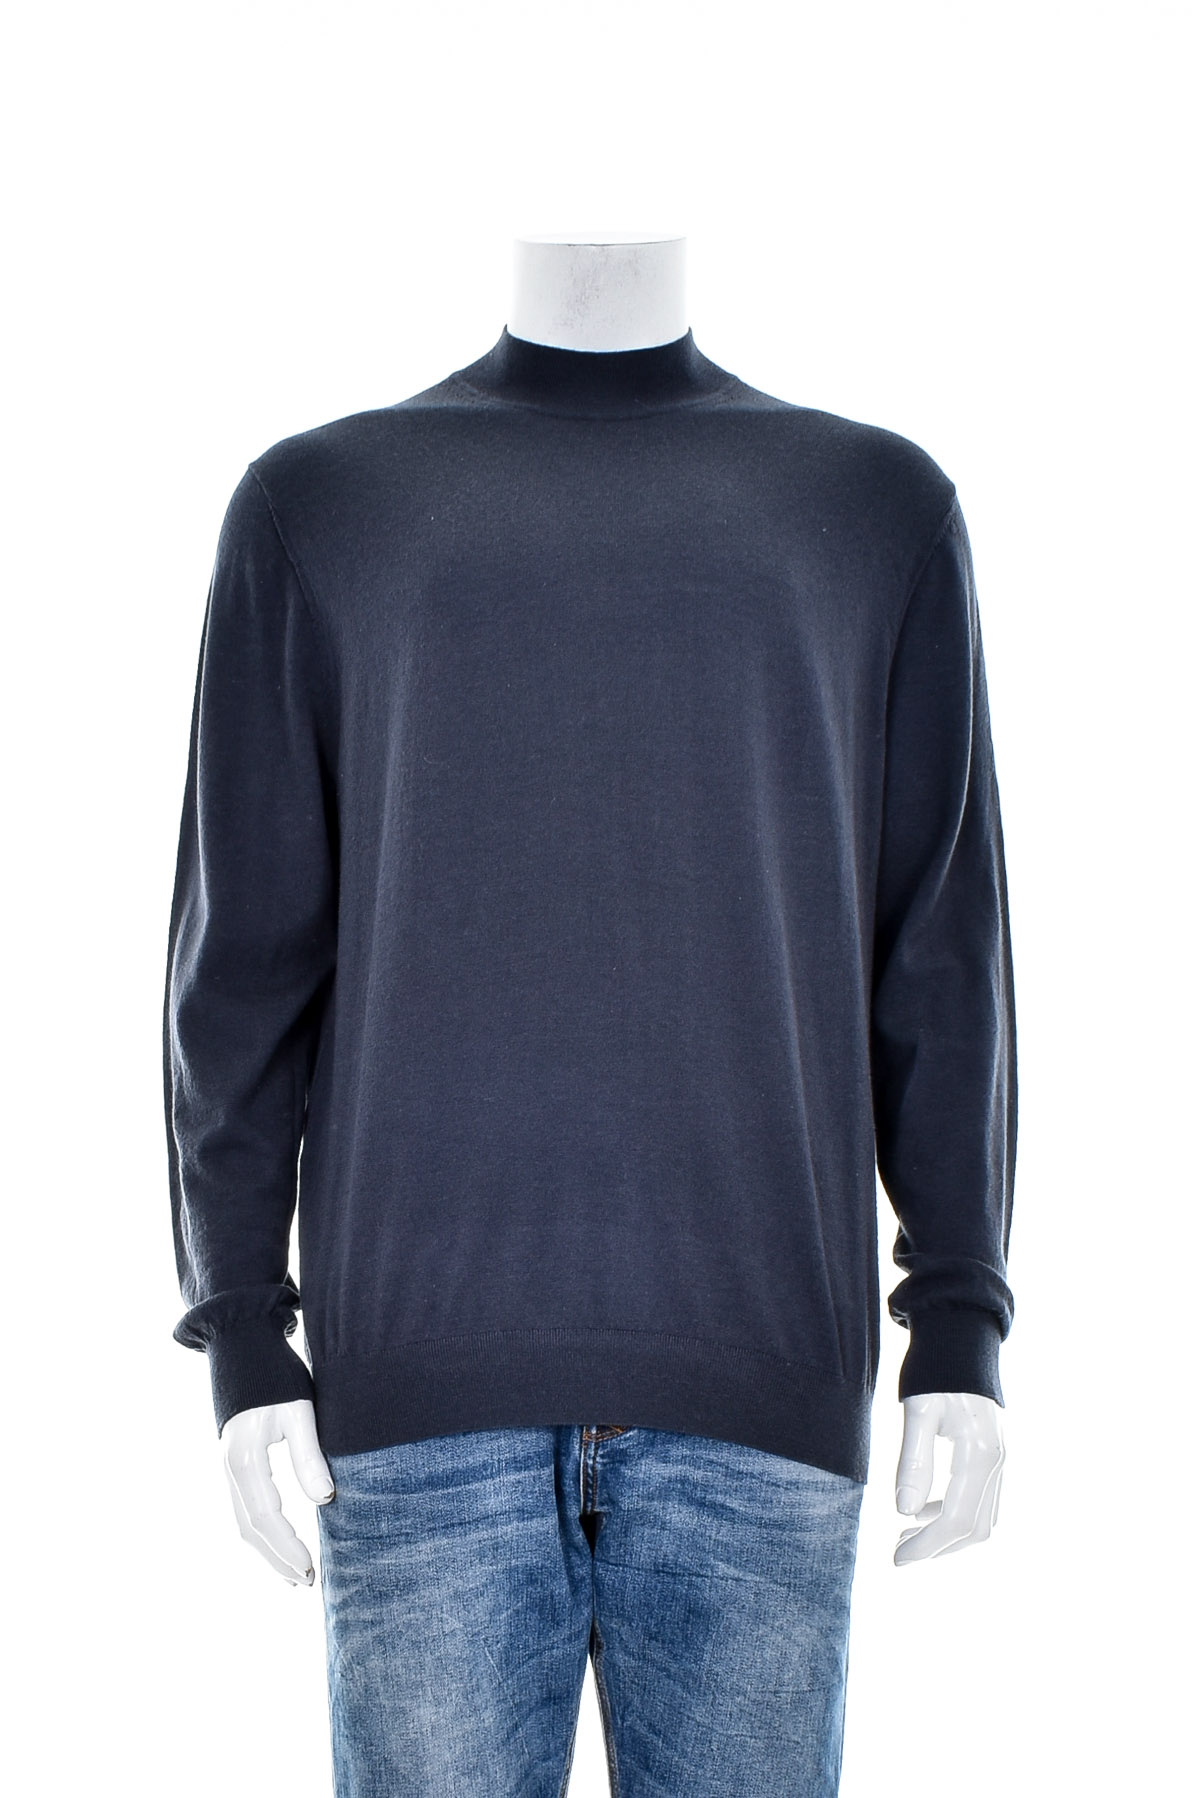 discount 68% Navy Blue M Massimo Dutti cardigan MEN FASHION Jumpers & Sweatshirts Basic 